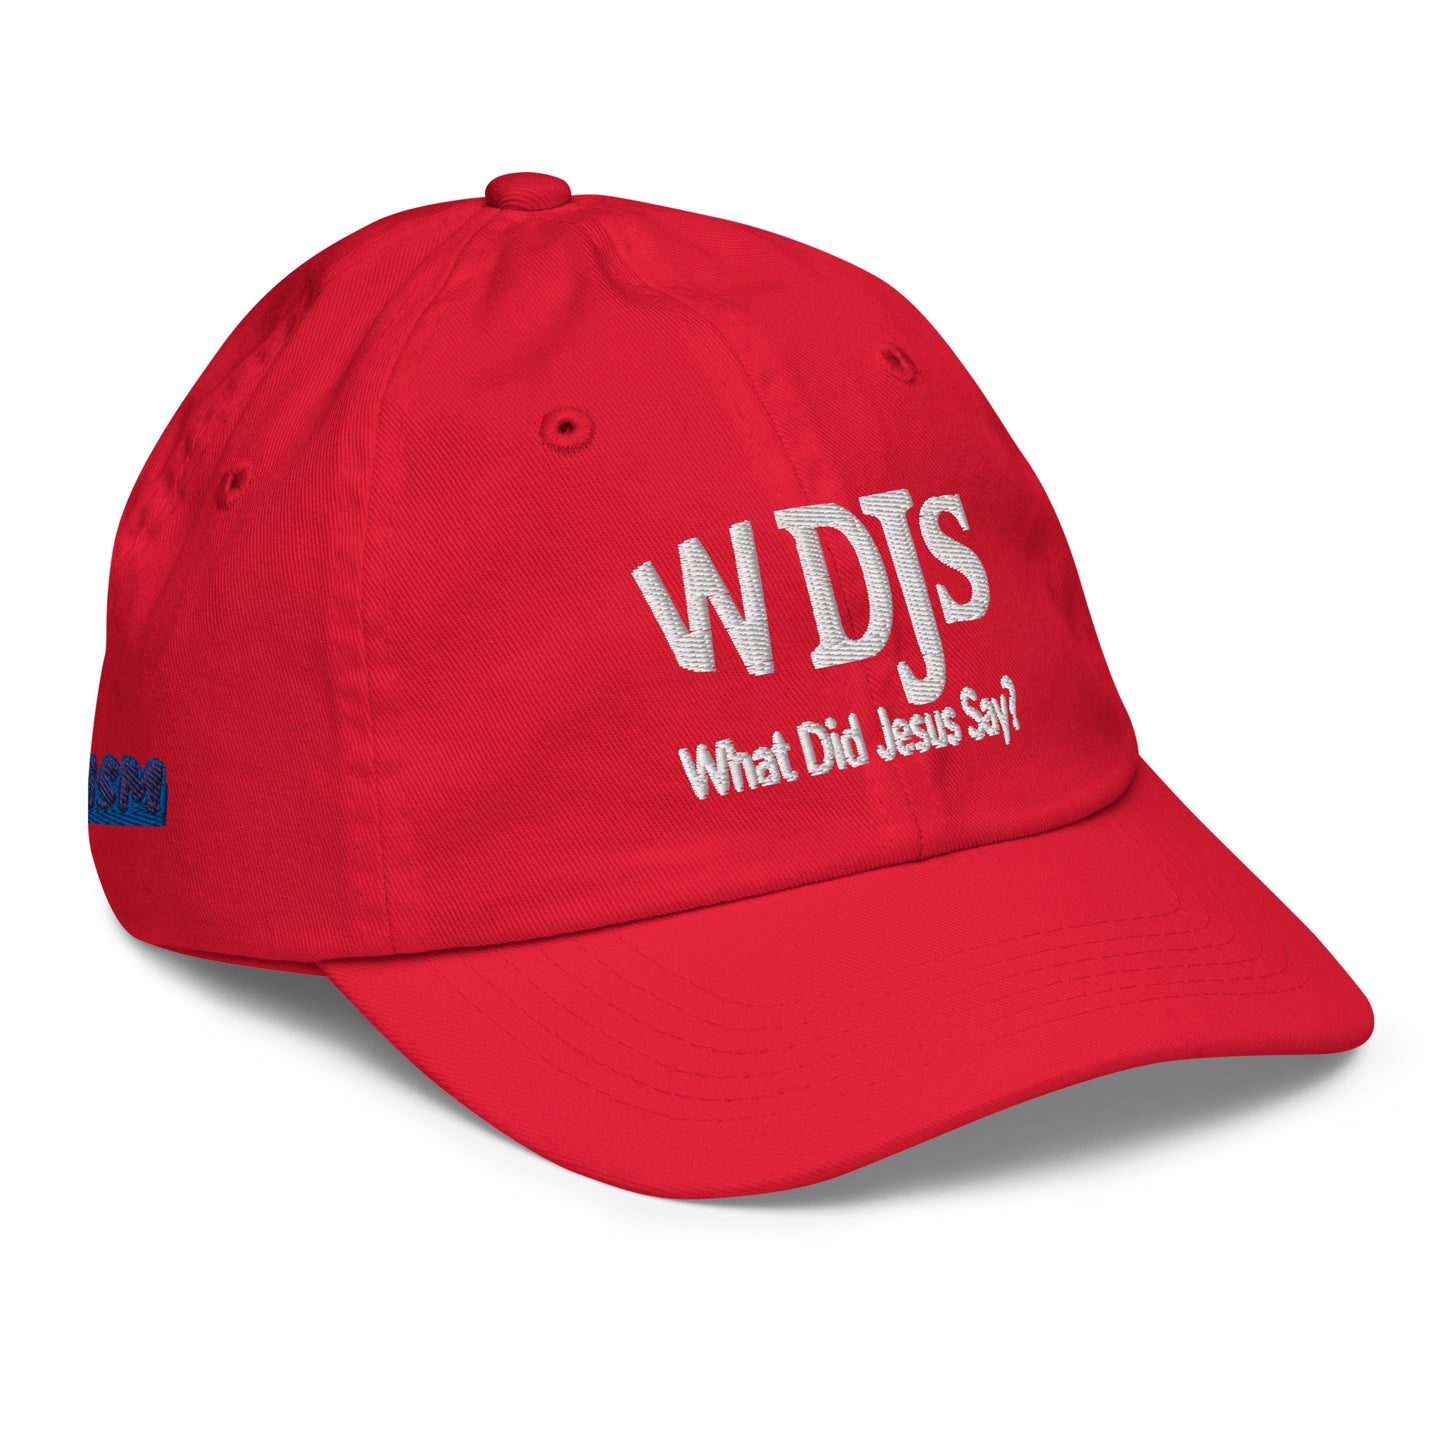 WDJS What Did Jesus Say Youth Baseball Cap